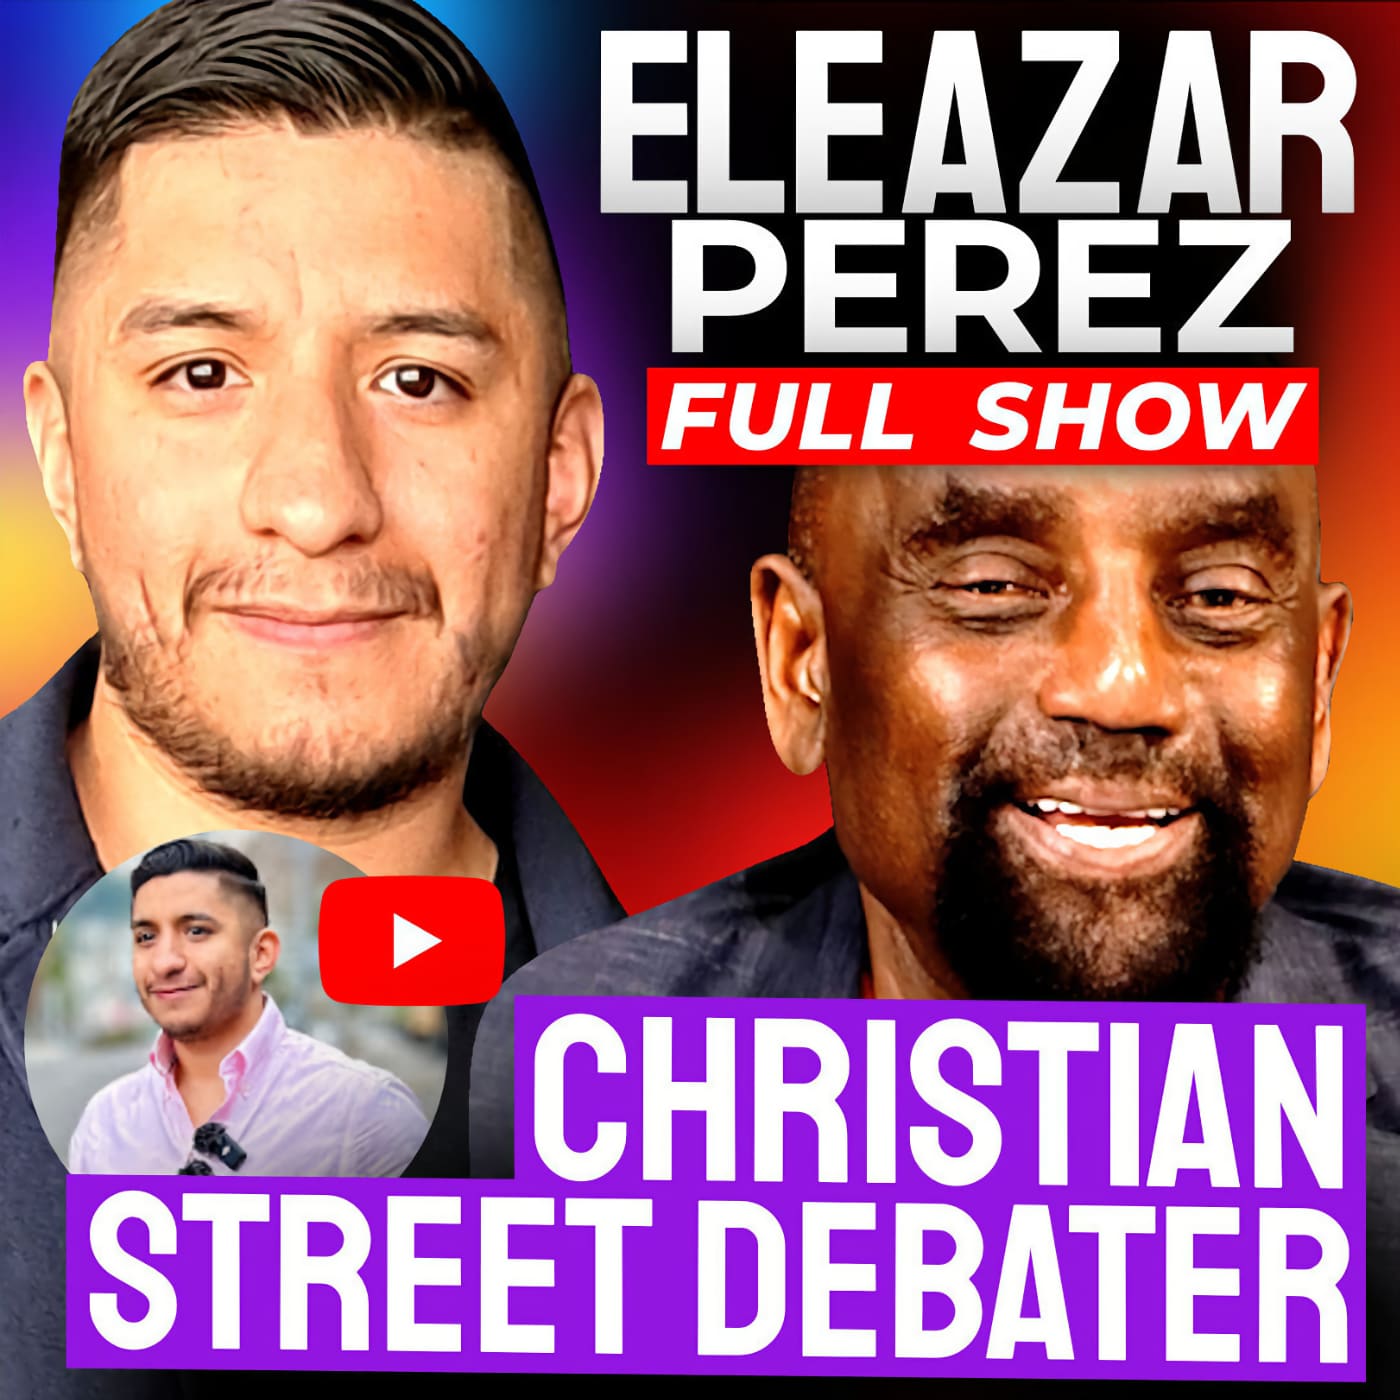 Street Debater Eleazar Perez Joins Jesse! (#365)